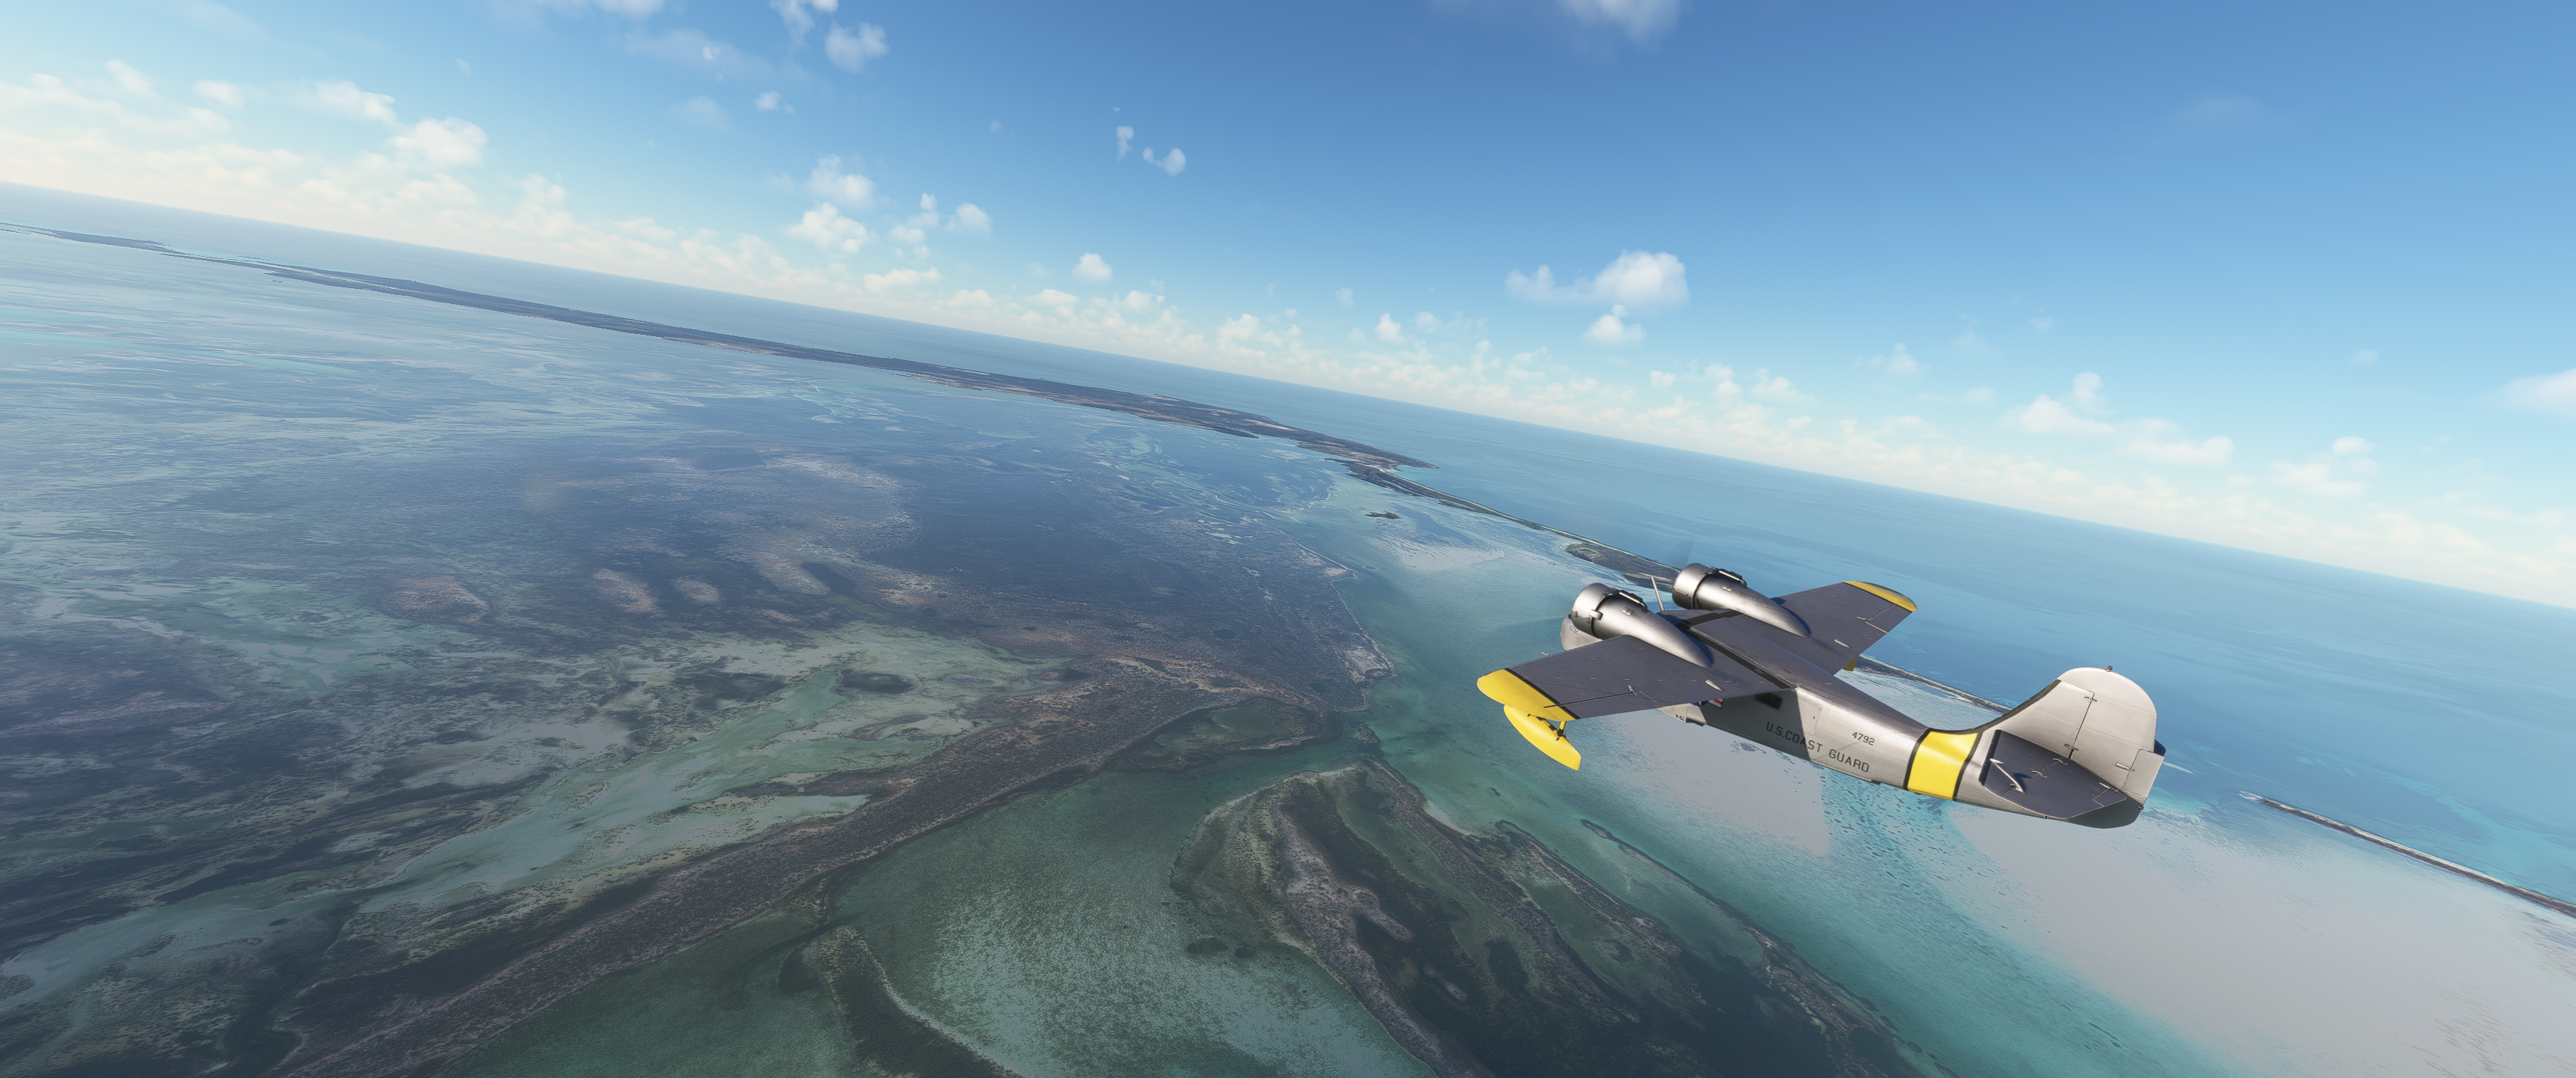 General 3440x1440 flight simulator video games Microsoft Flight Simulator 2020 aircraft video game landscape